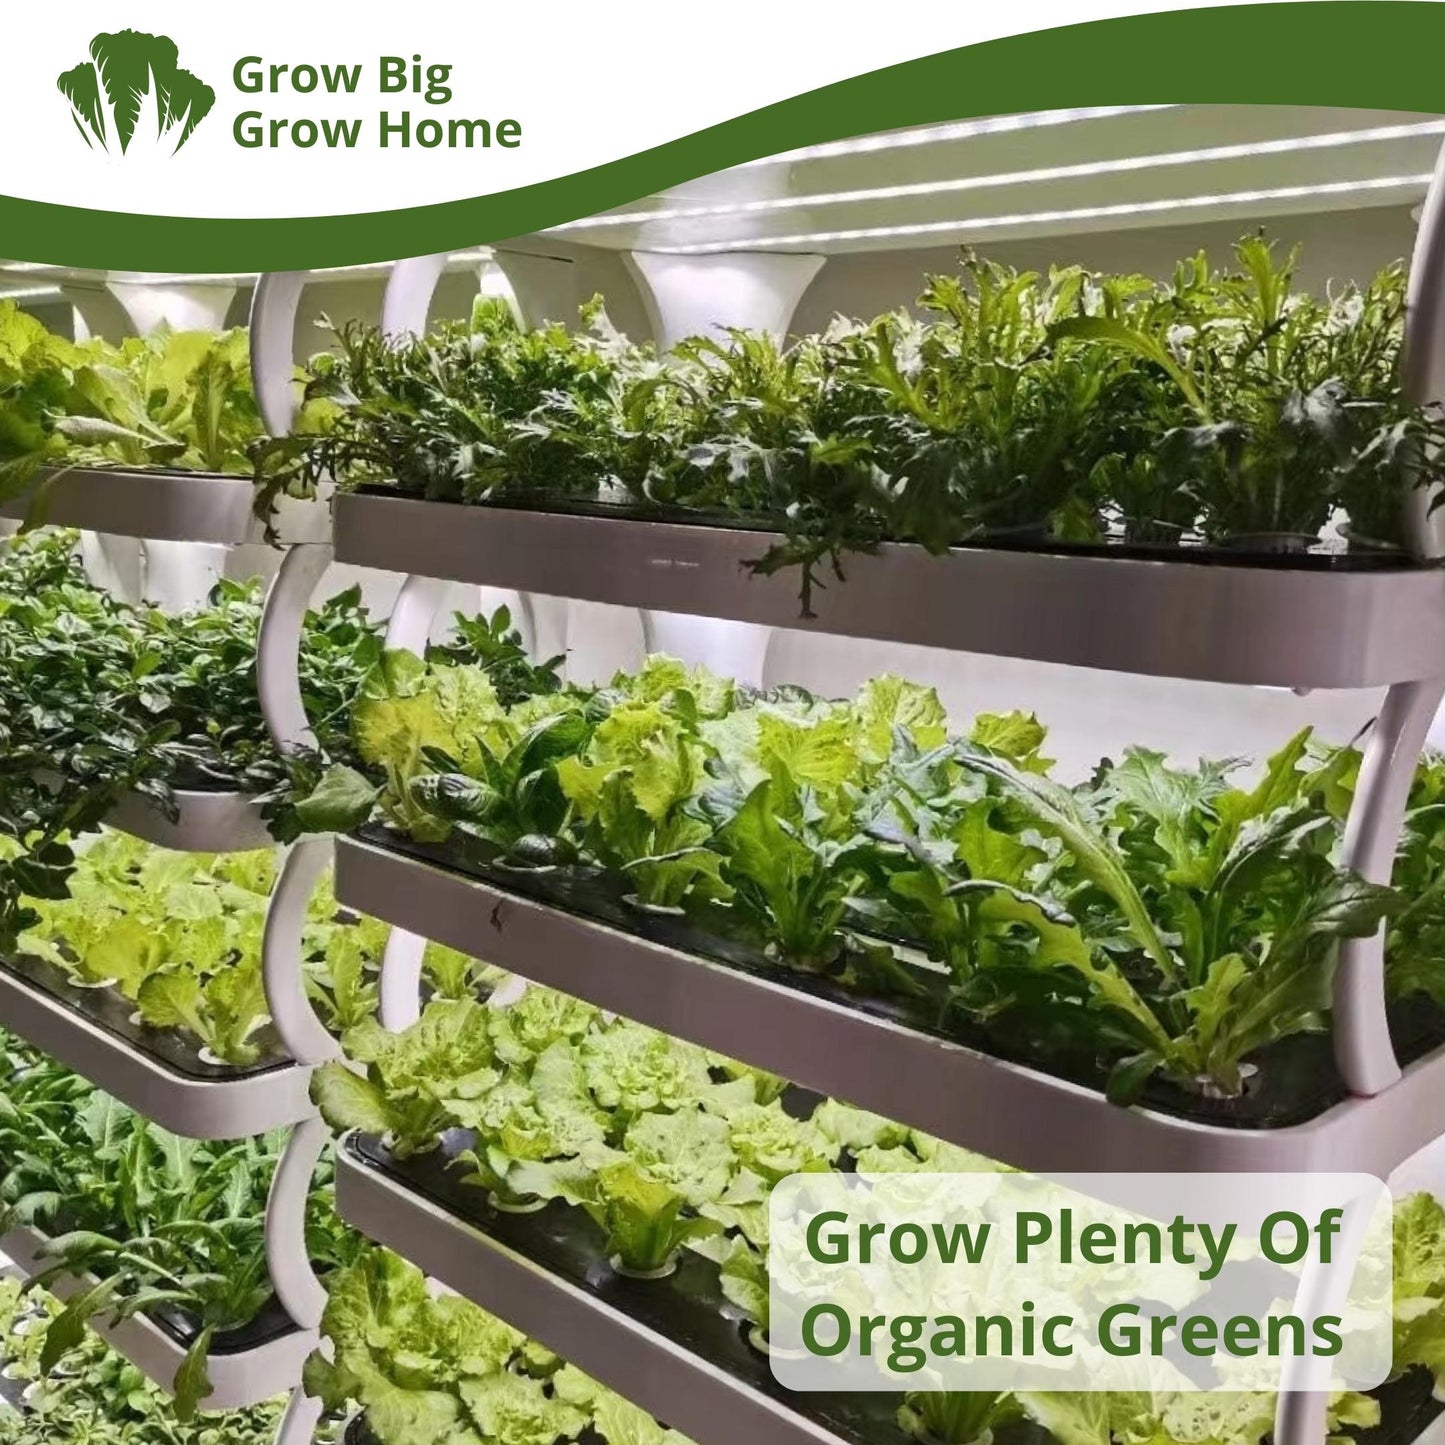 Grow plenty of fresh, organic greens hydroponically with Grow System 157